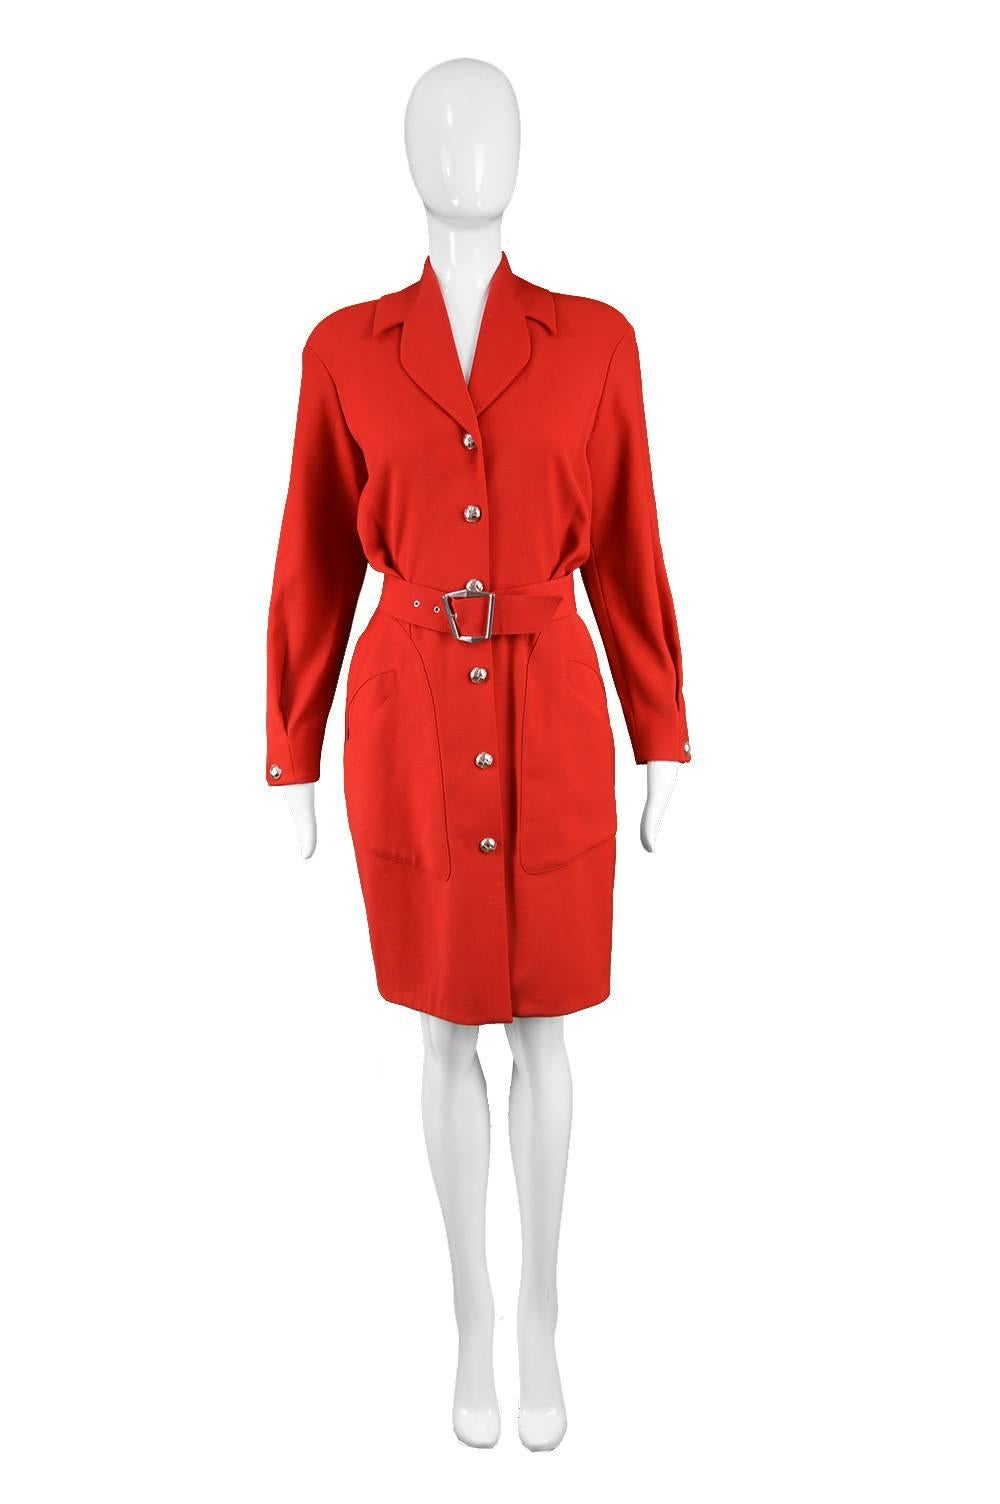 Thierry Mugler Vintage 1980s Red Wool Long Sleeve Shoulder Pads Shirtdress

Estimated Size: UK 10/ US 6/ EU 38. Please check measurements. 
Bust - 36” / 91cm (has a loose, blouson fit on top)
Waist - 28” / 71cm
Hips - 36” / 91cm
Length (Shoulder to